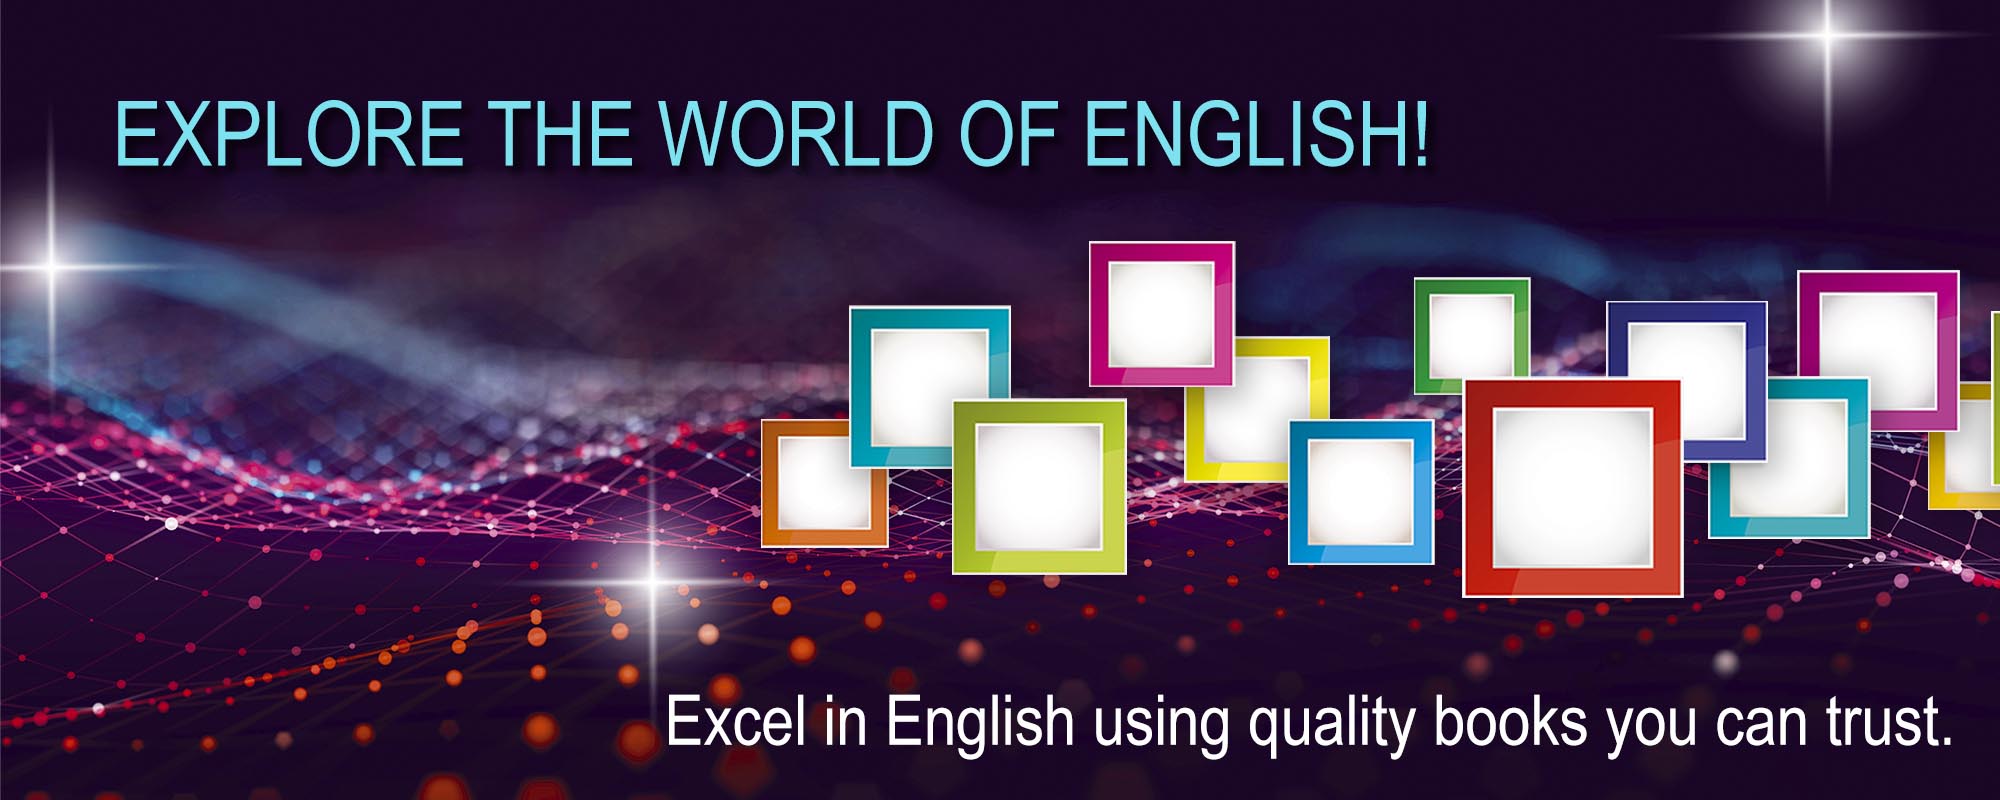 Explore the world of English!